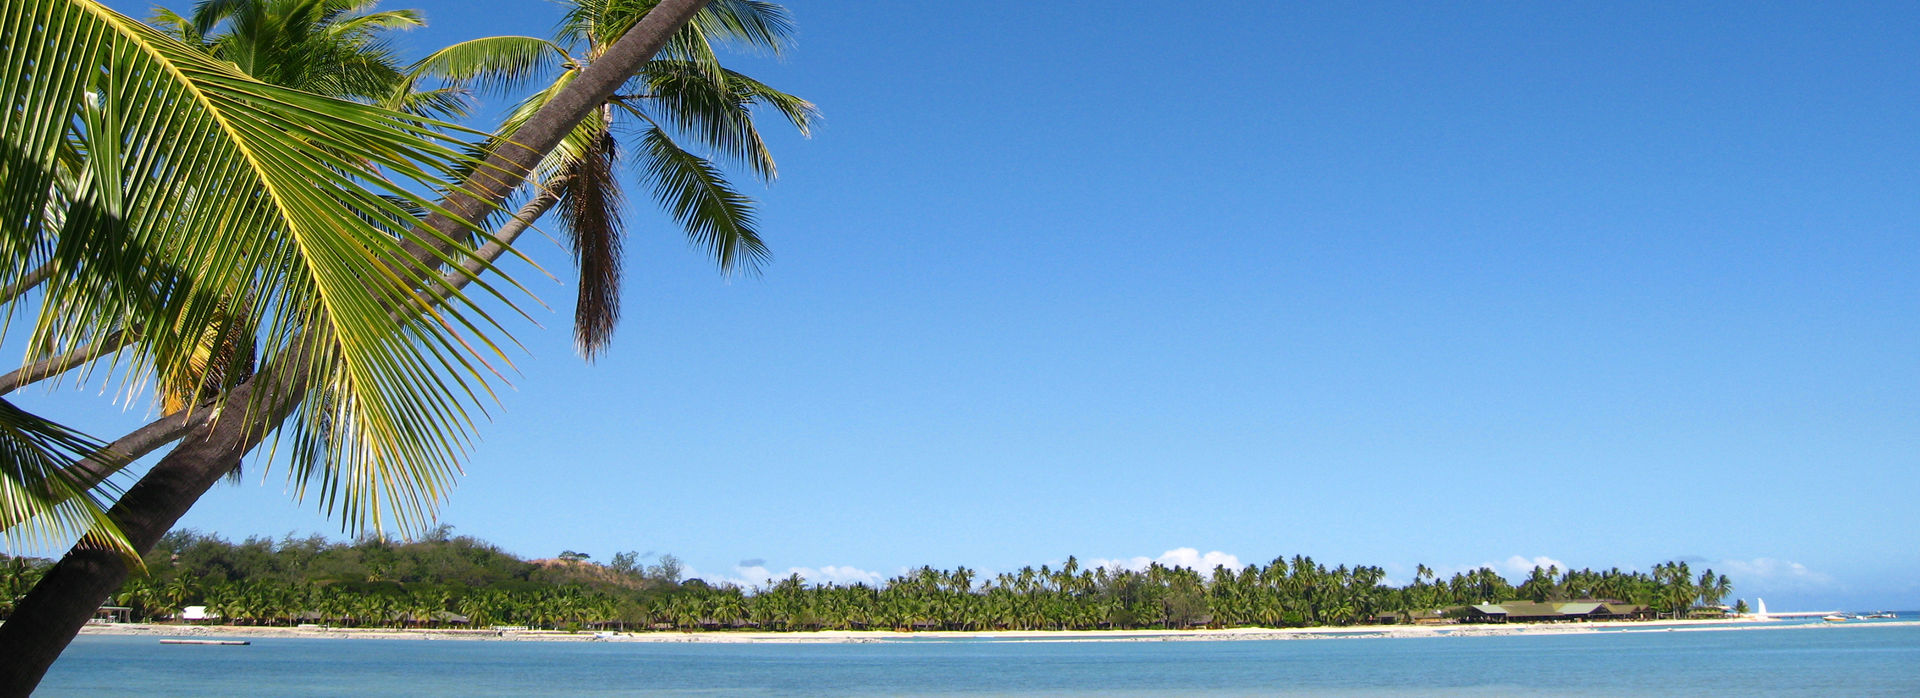 Pacific Islands: Fiji